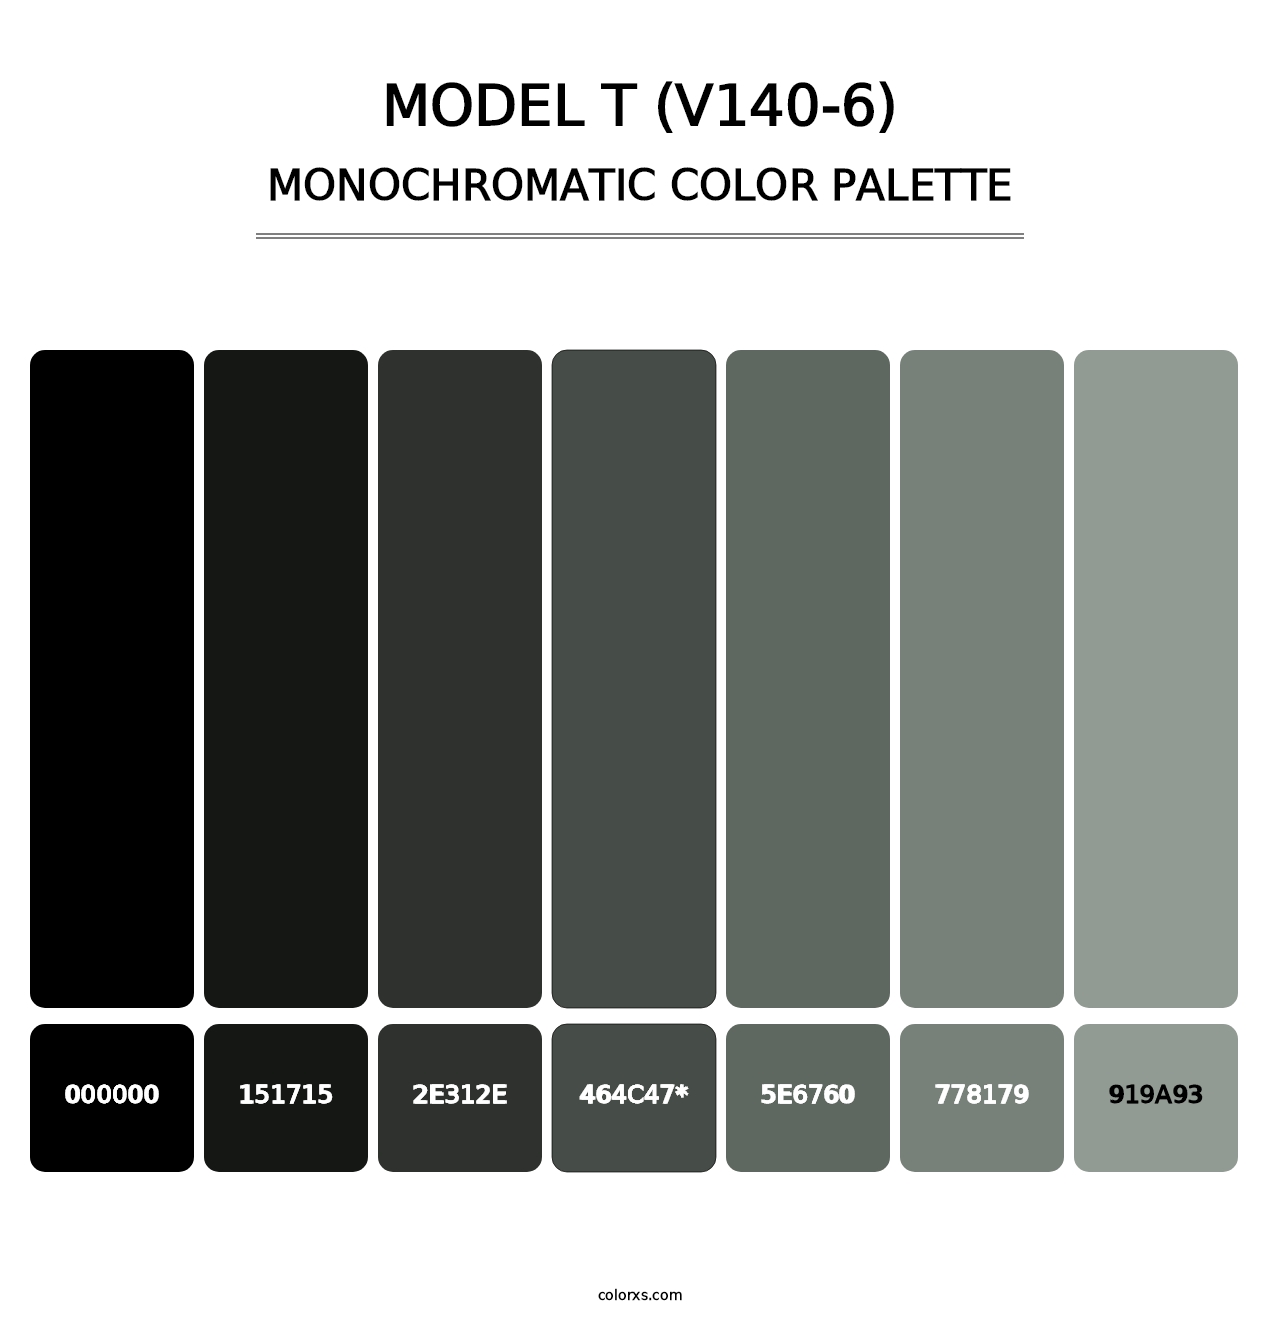 Model T (V140-6) - Monochromatic Color Palette